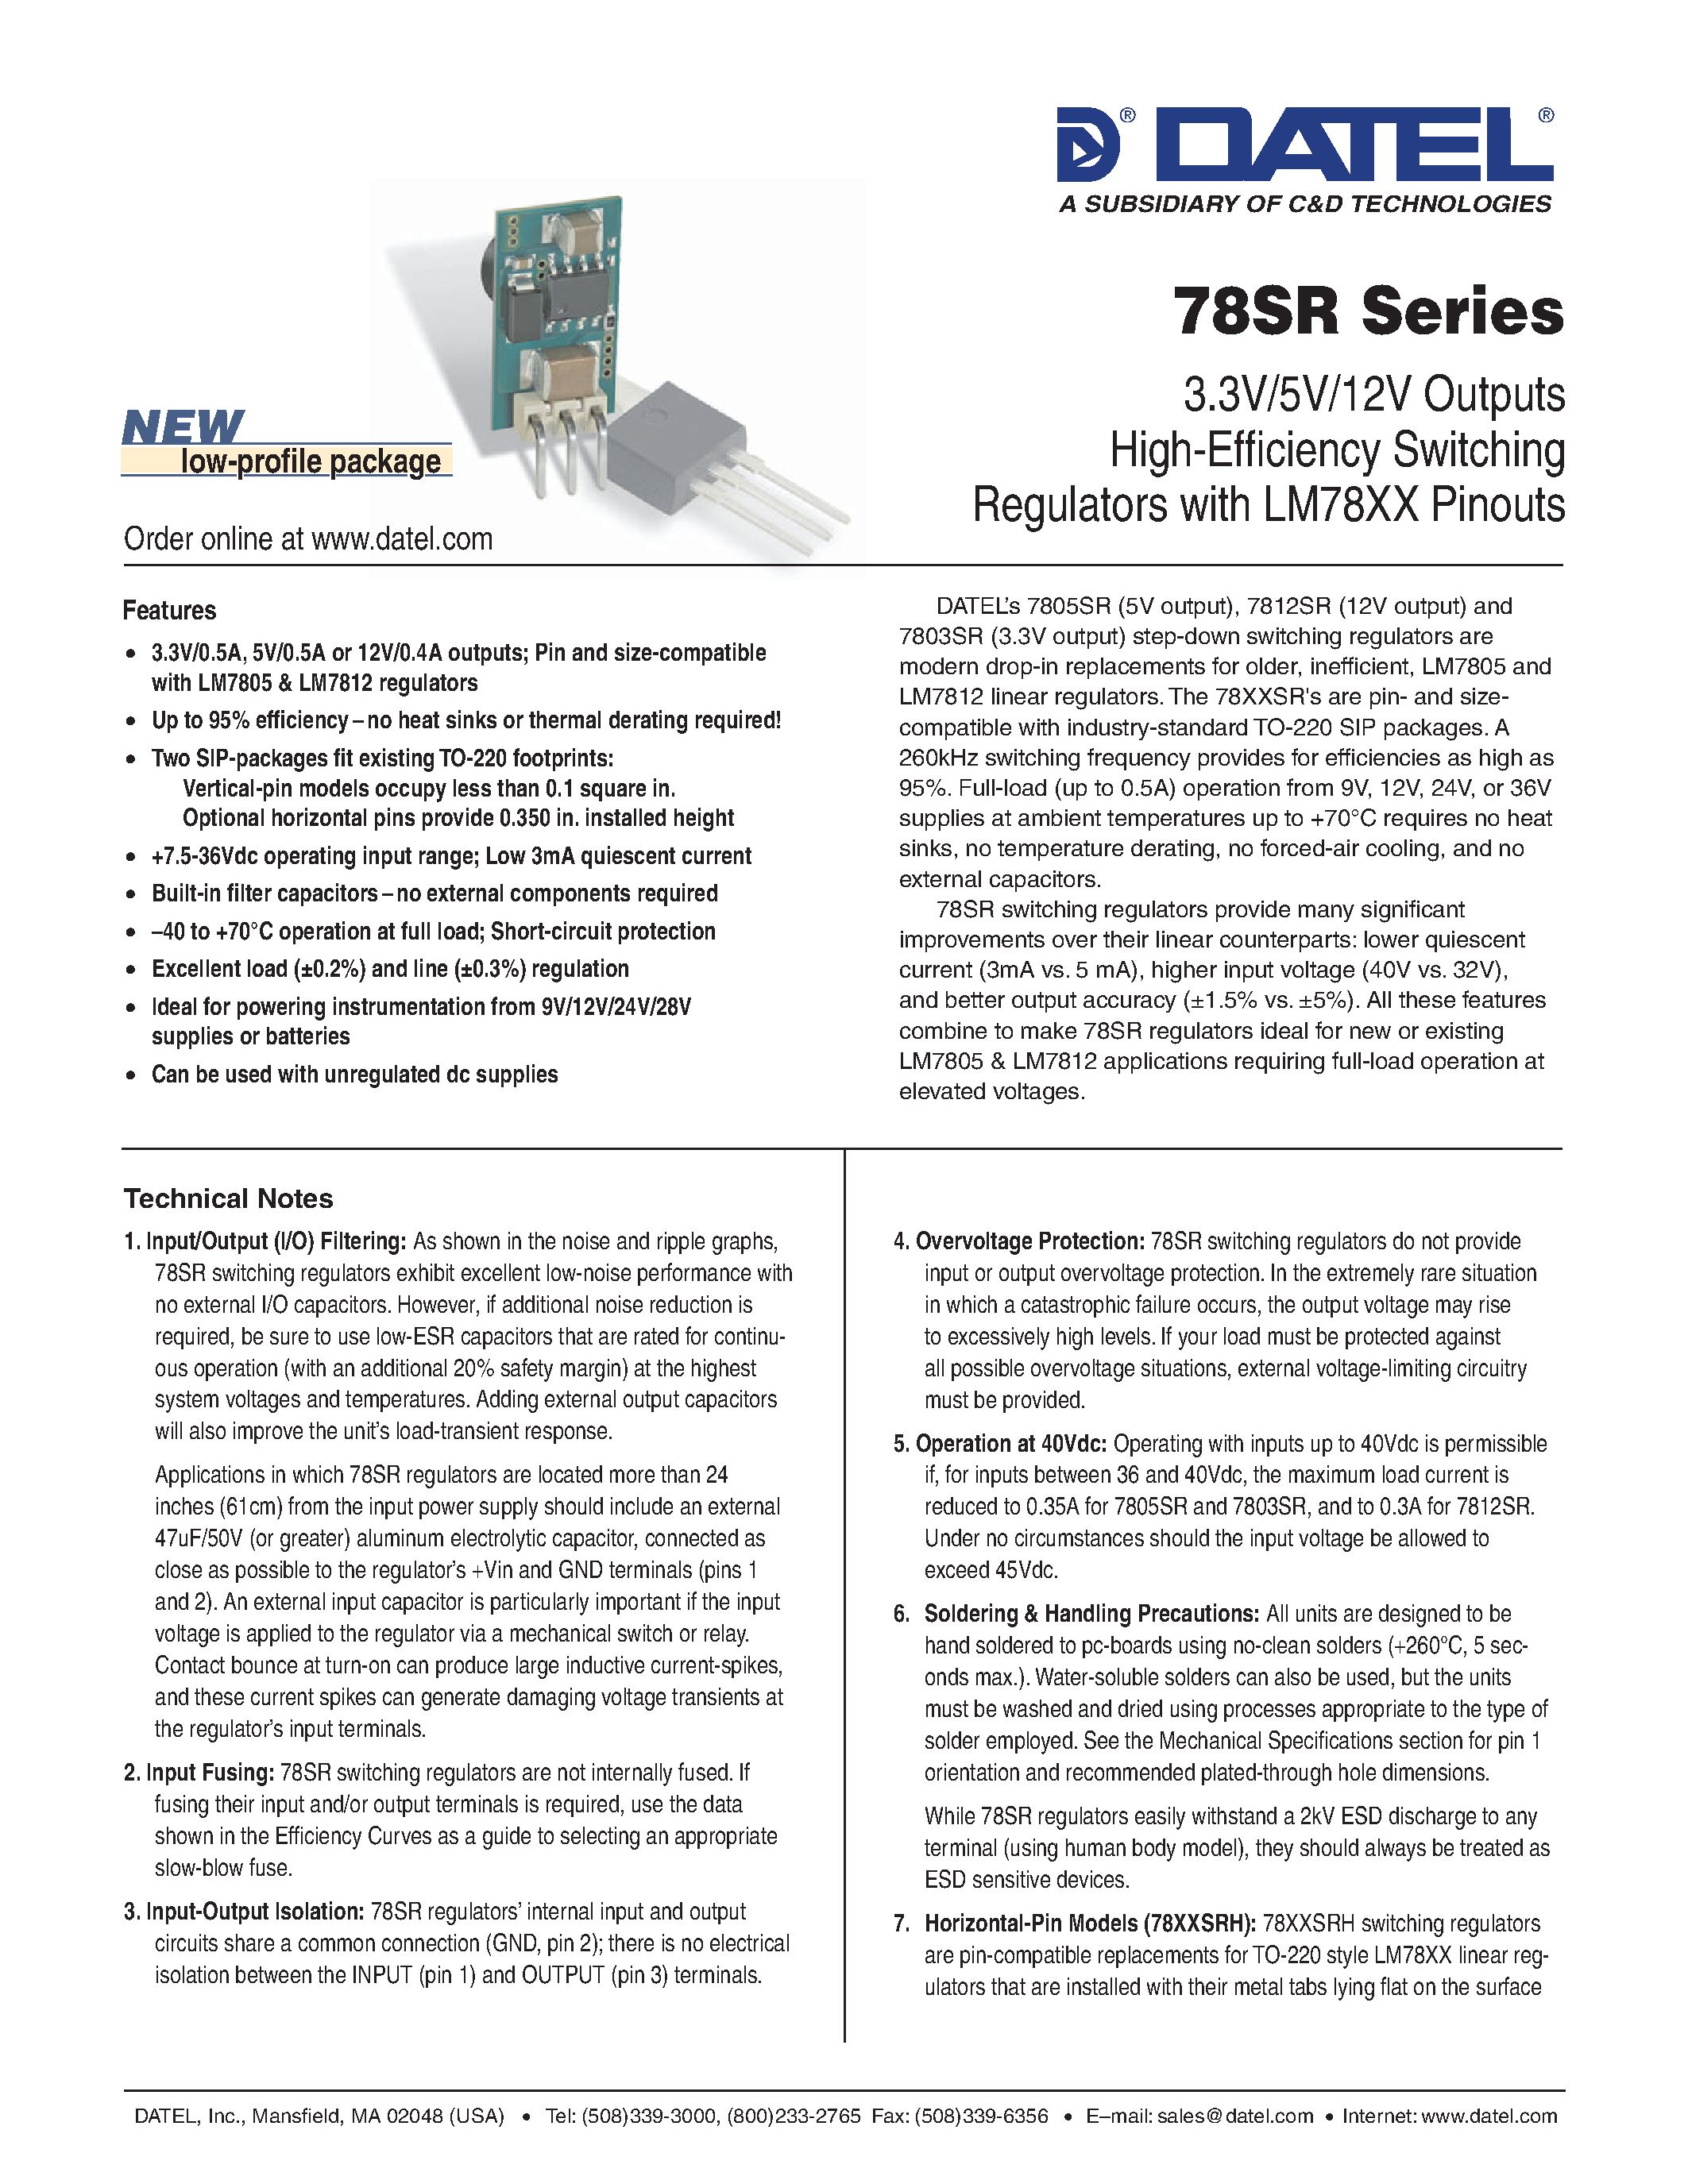 Datasheet DMS-78xxSR - 3.3V/5V/12V Outputs High-Effi ciency Switching Regulators with LM78XX Pinouts page 1